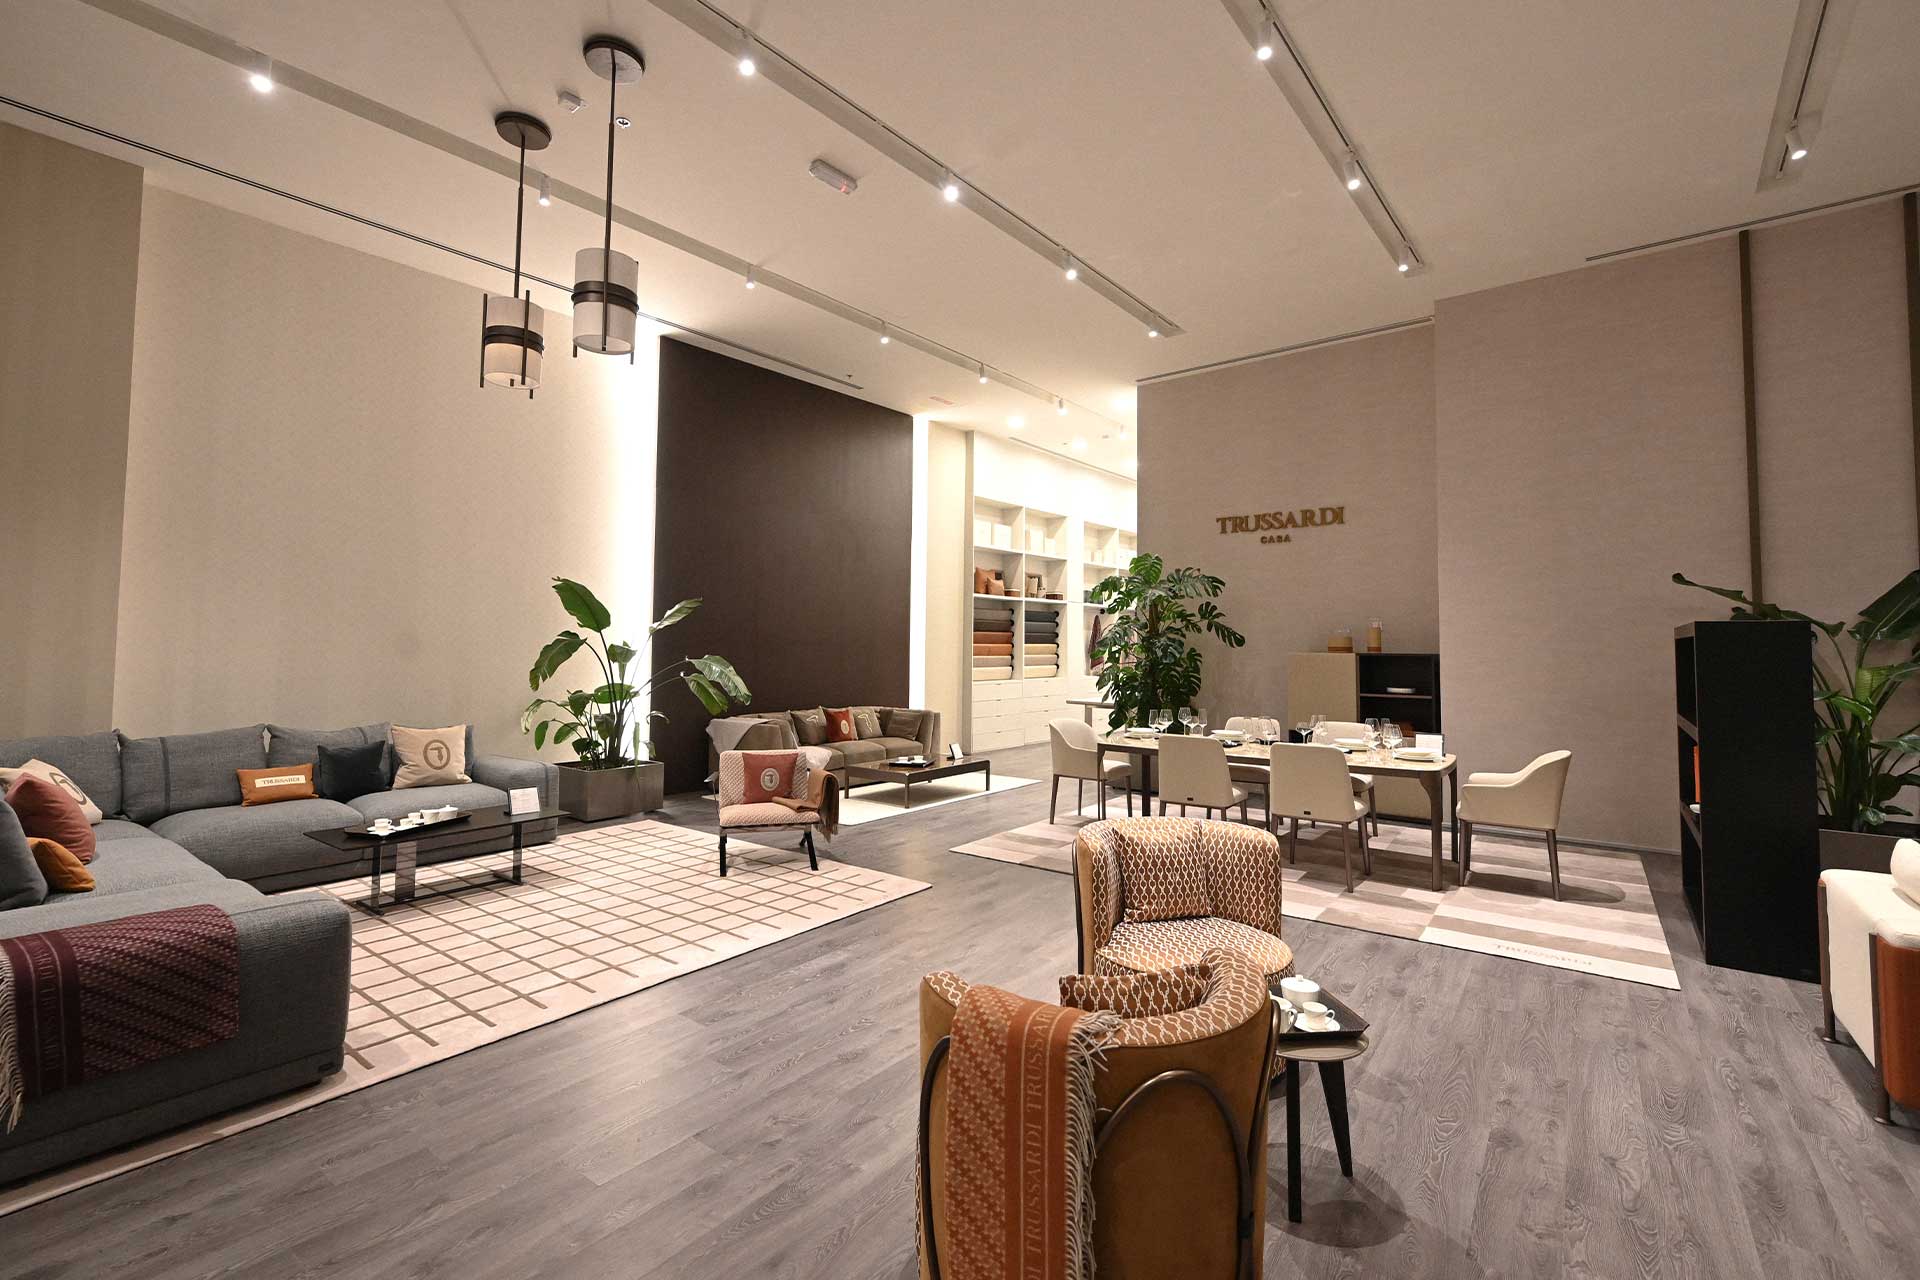 Luxury Living - Interior Design of Luxury Furniture Store of Trussardi in Mall of Qatar